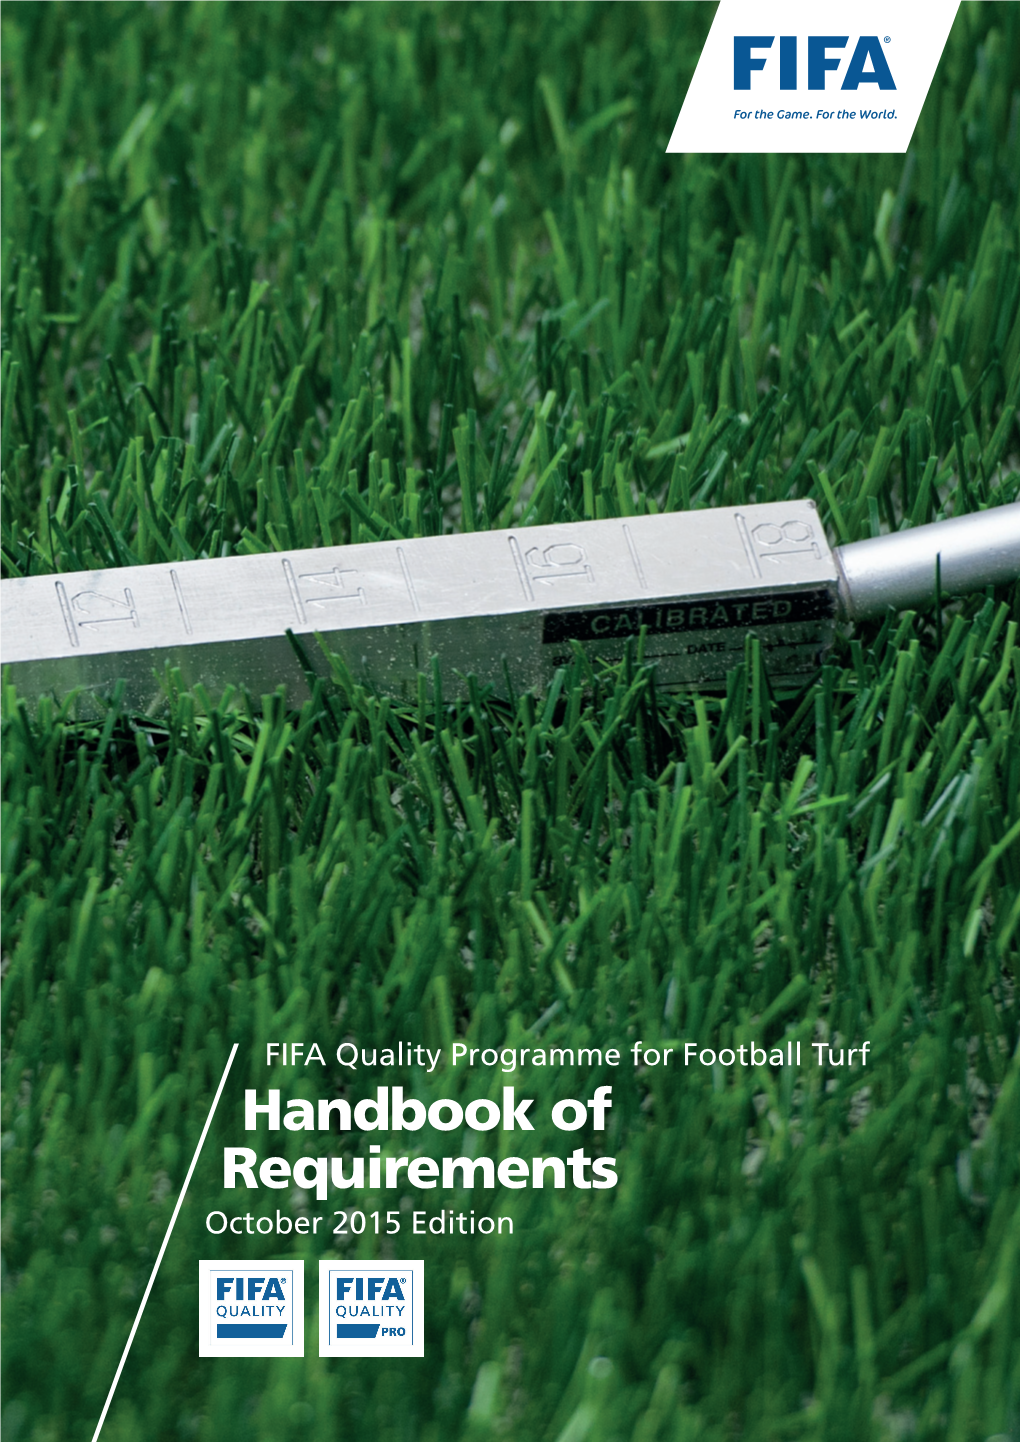 Handbook of Requirements October 2015 Edition Contents